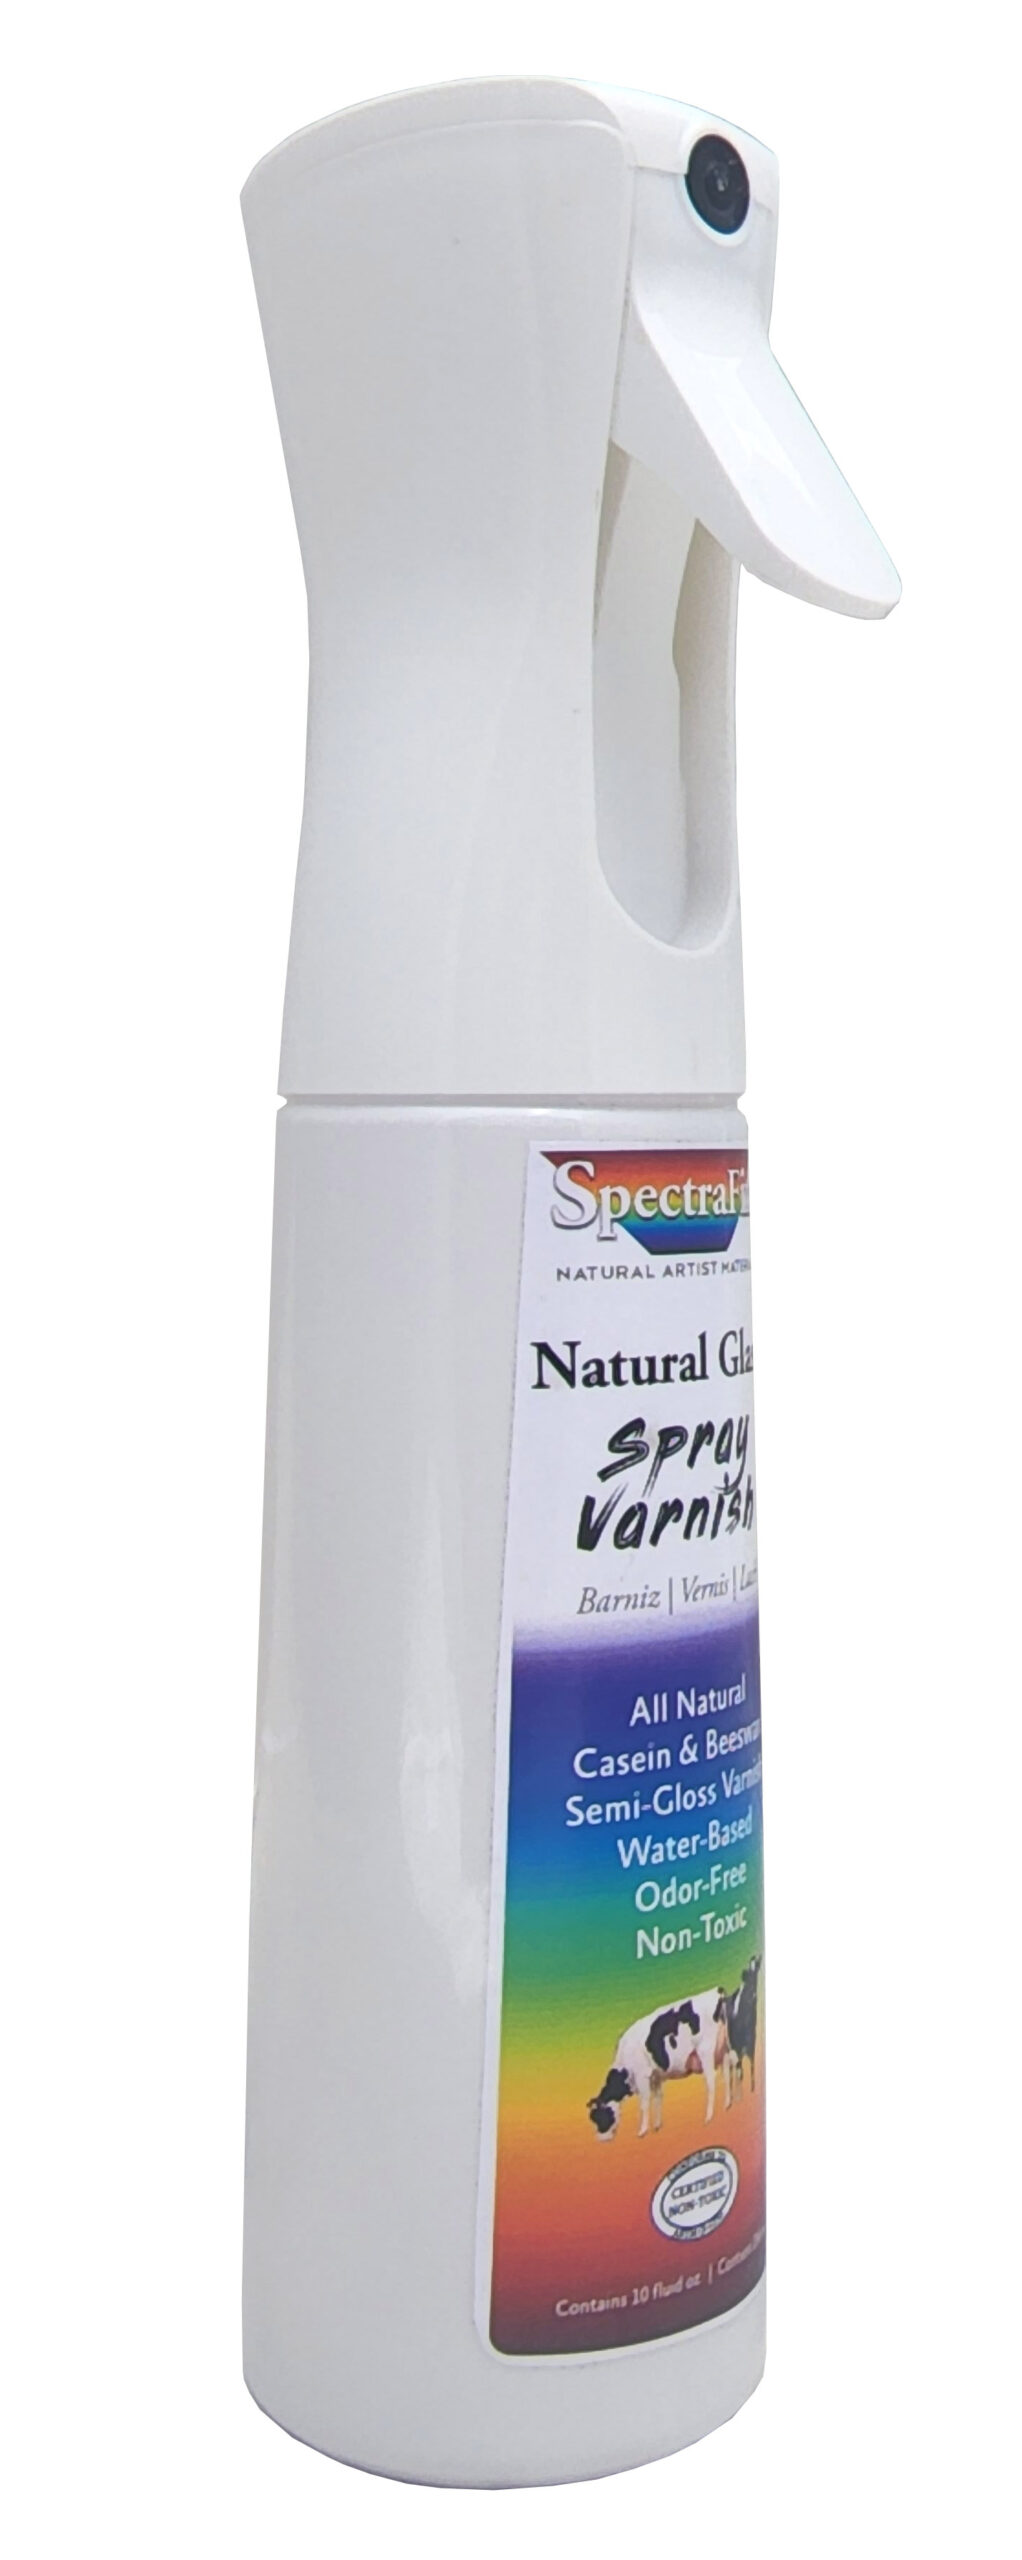 Natural Glass Spray Varnish – SpectraFix